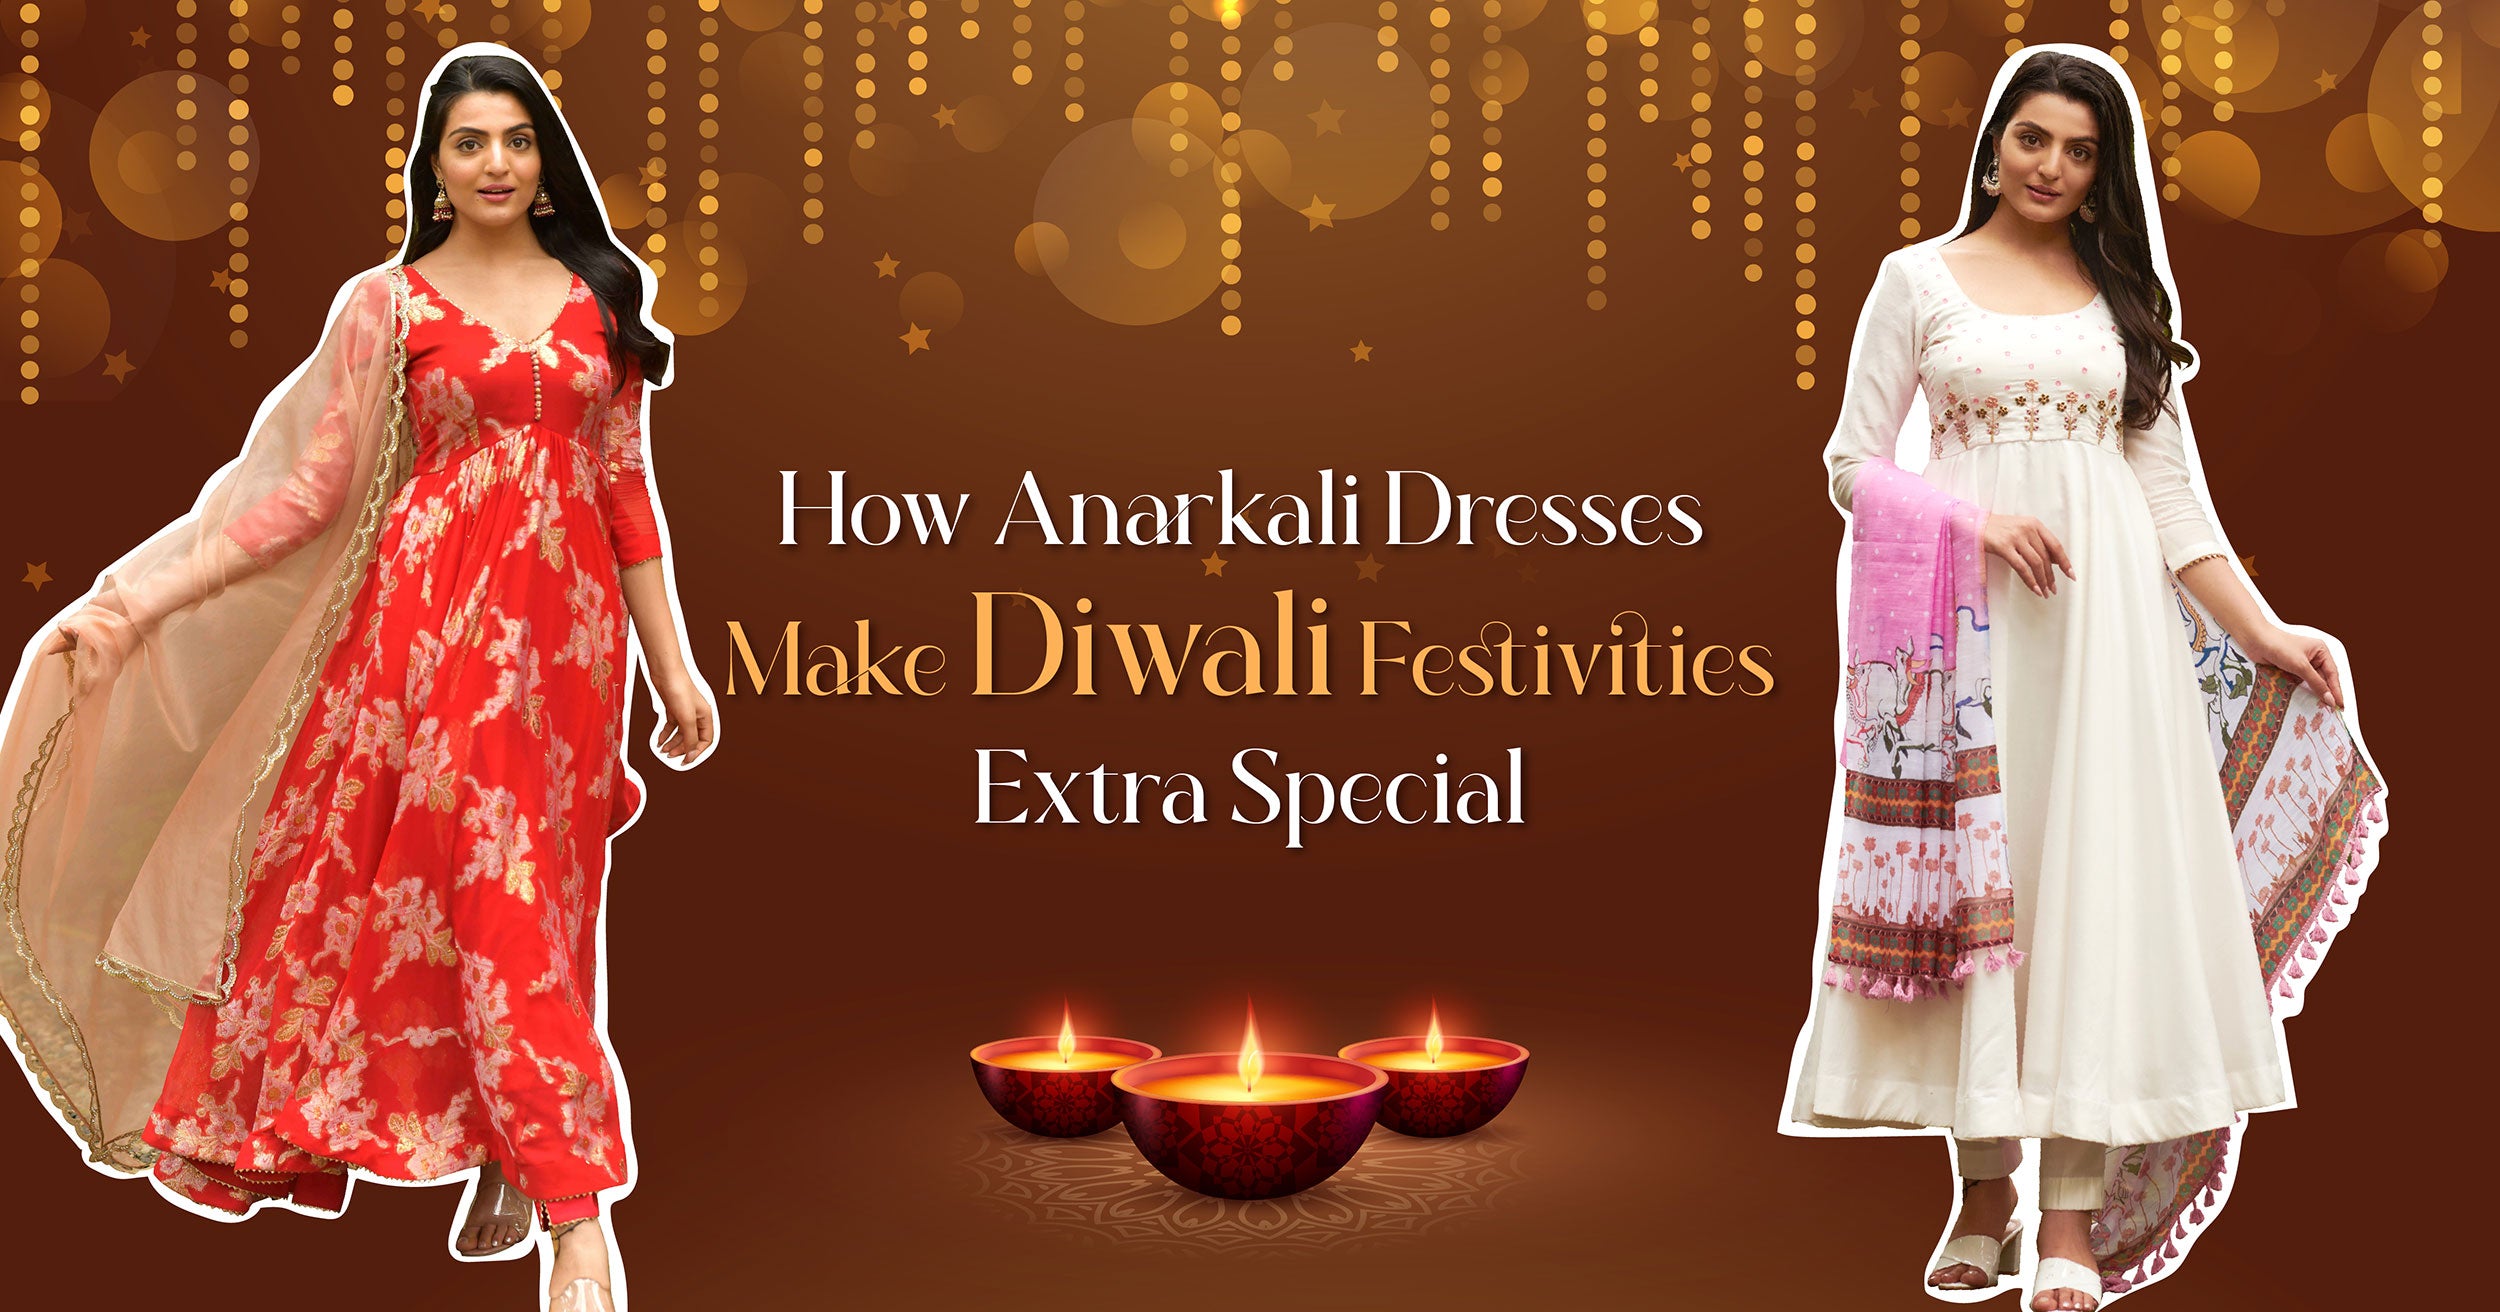 Bullion Knot - How Anarkali Dresses Make Diwali Festivities Extra Special